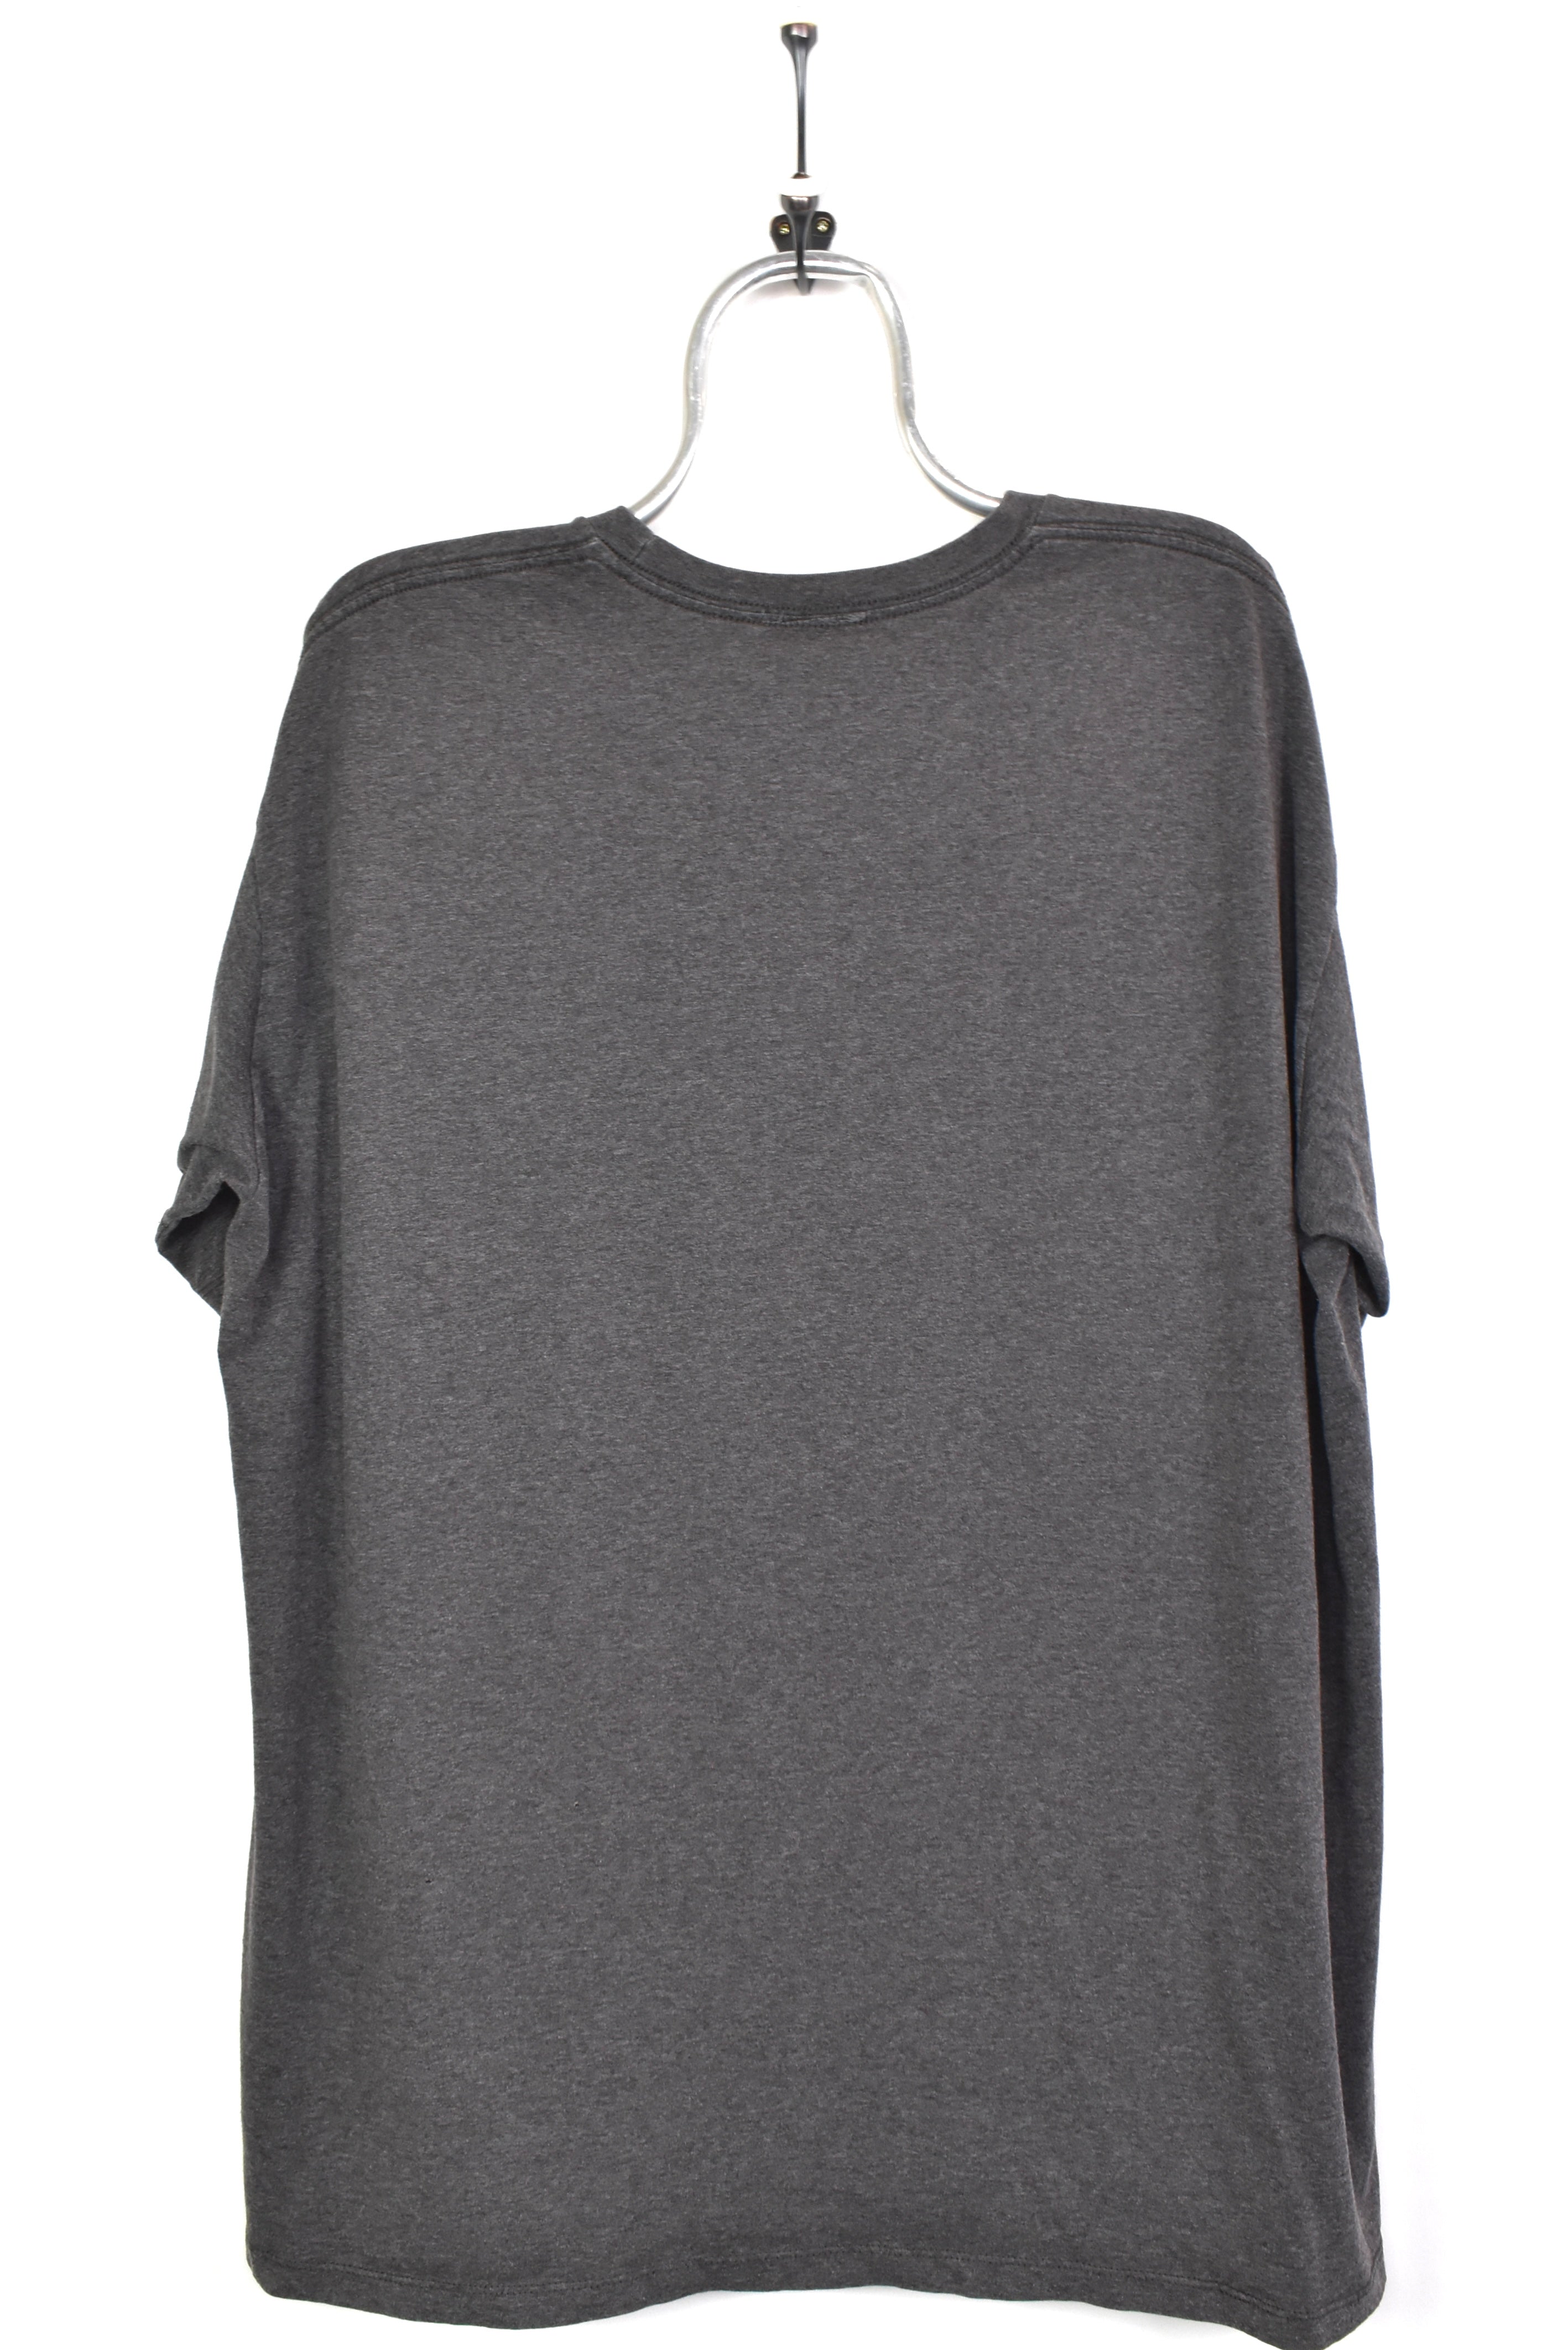 Modern Super Bowl shirt, 2015 Arizona graphic tee - XXL, dark grey PRO SPORT